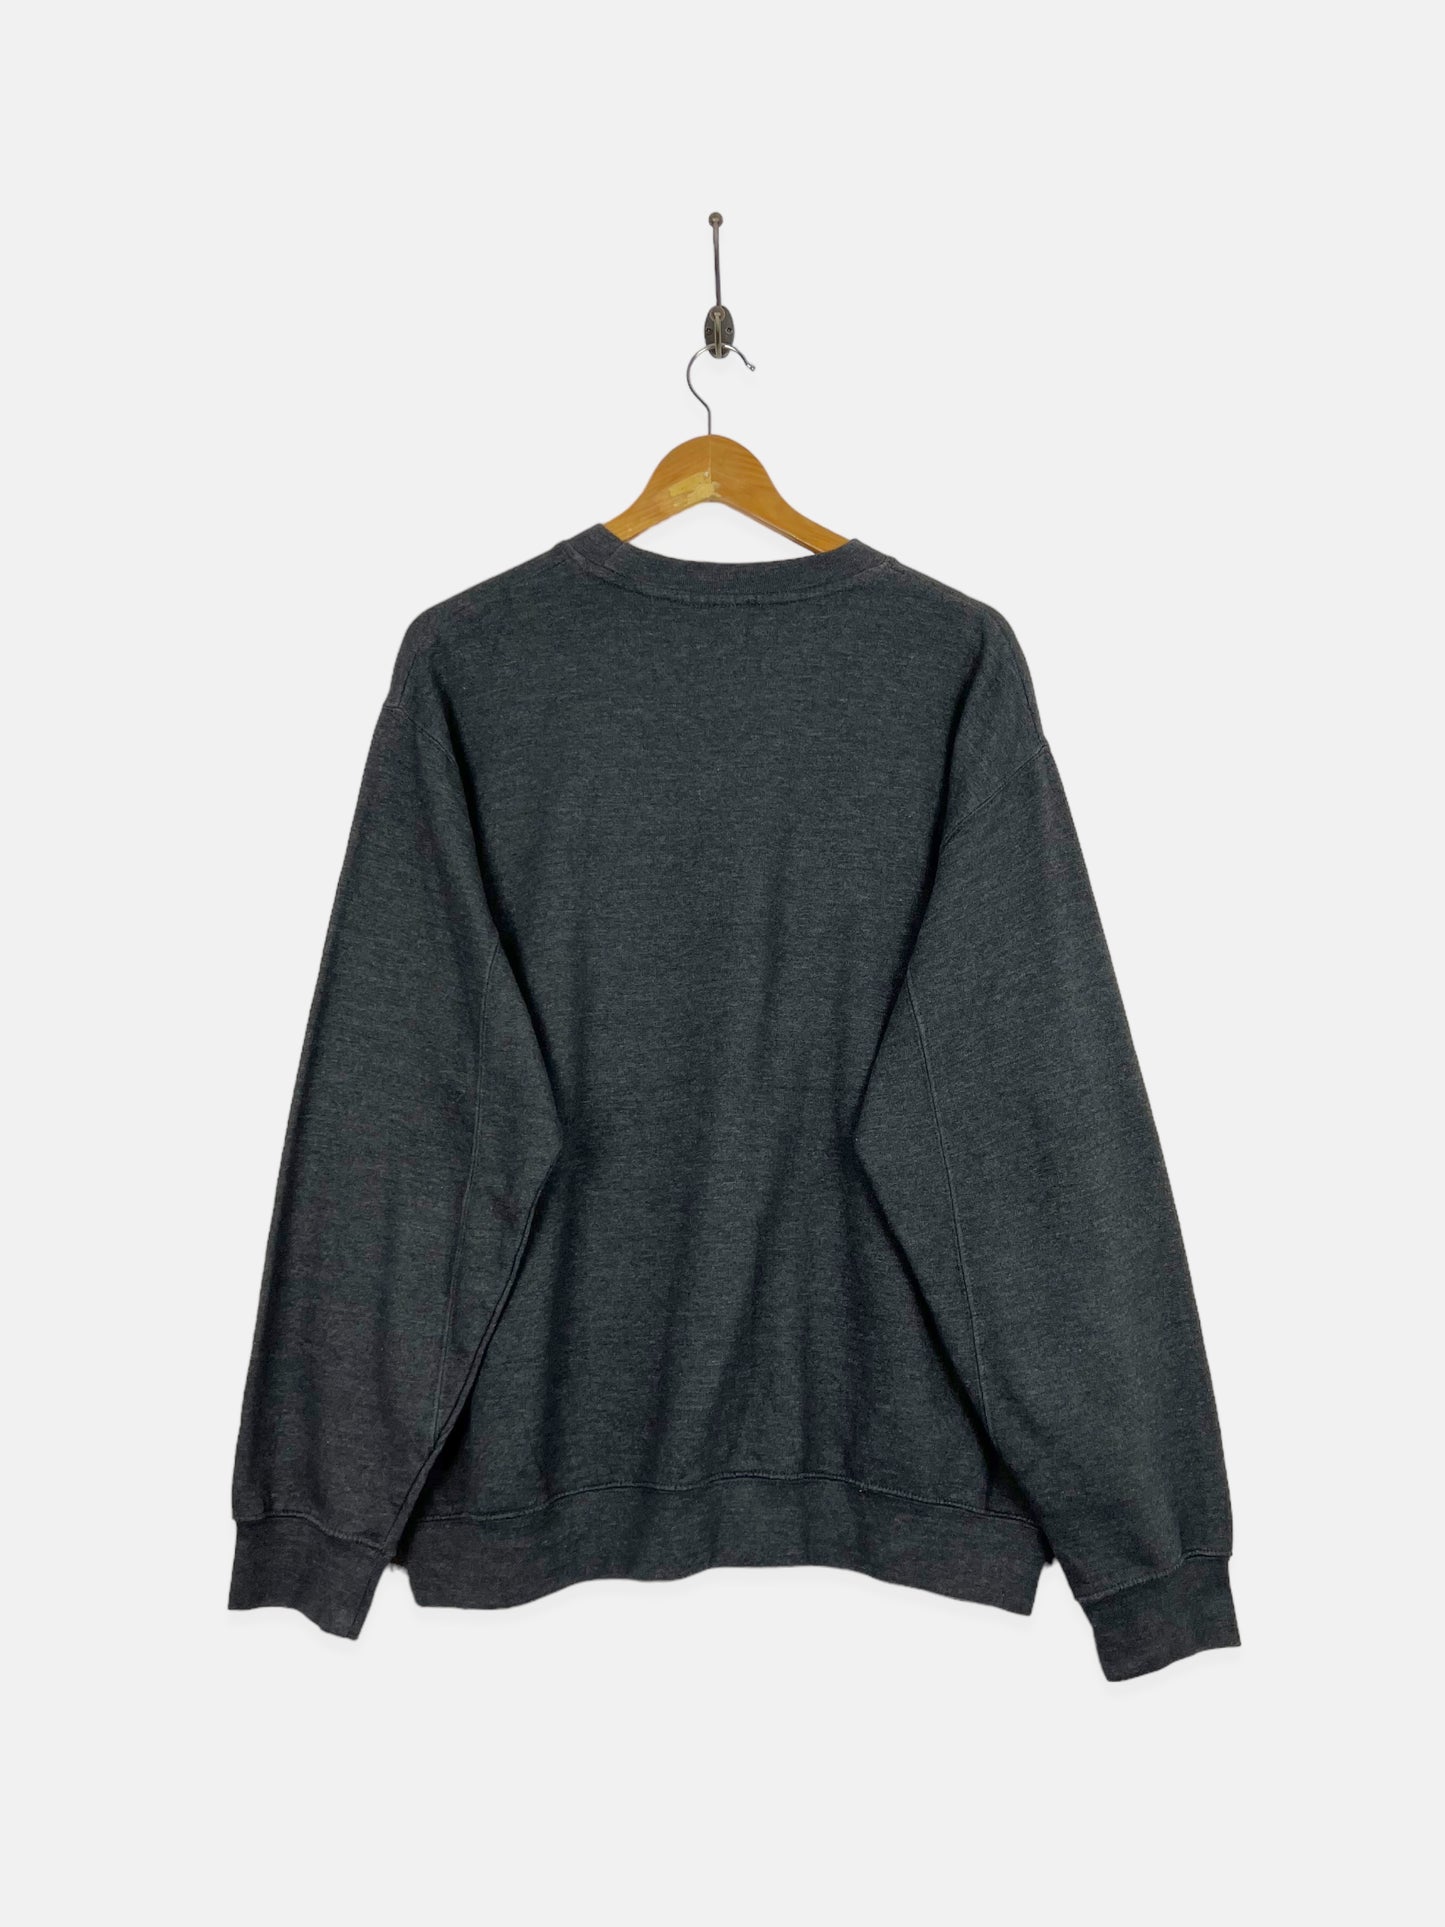 90's North Carolina University Embroidered Vintage Sweatshirt Size L-XL